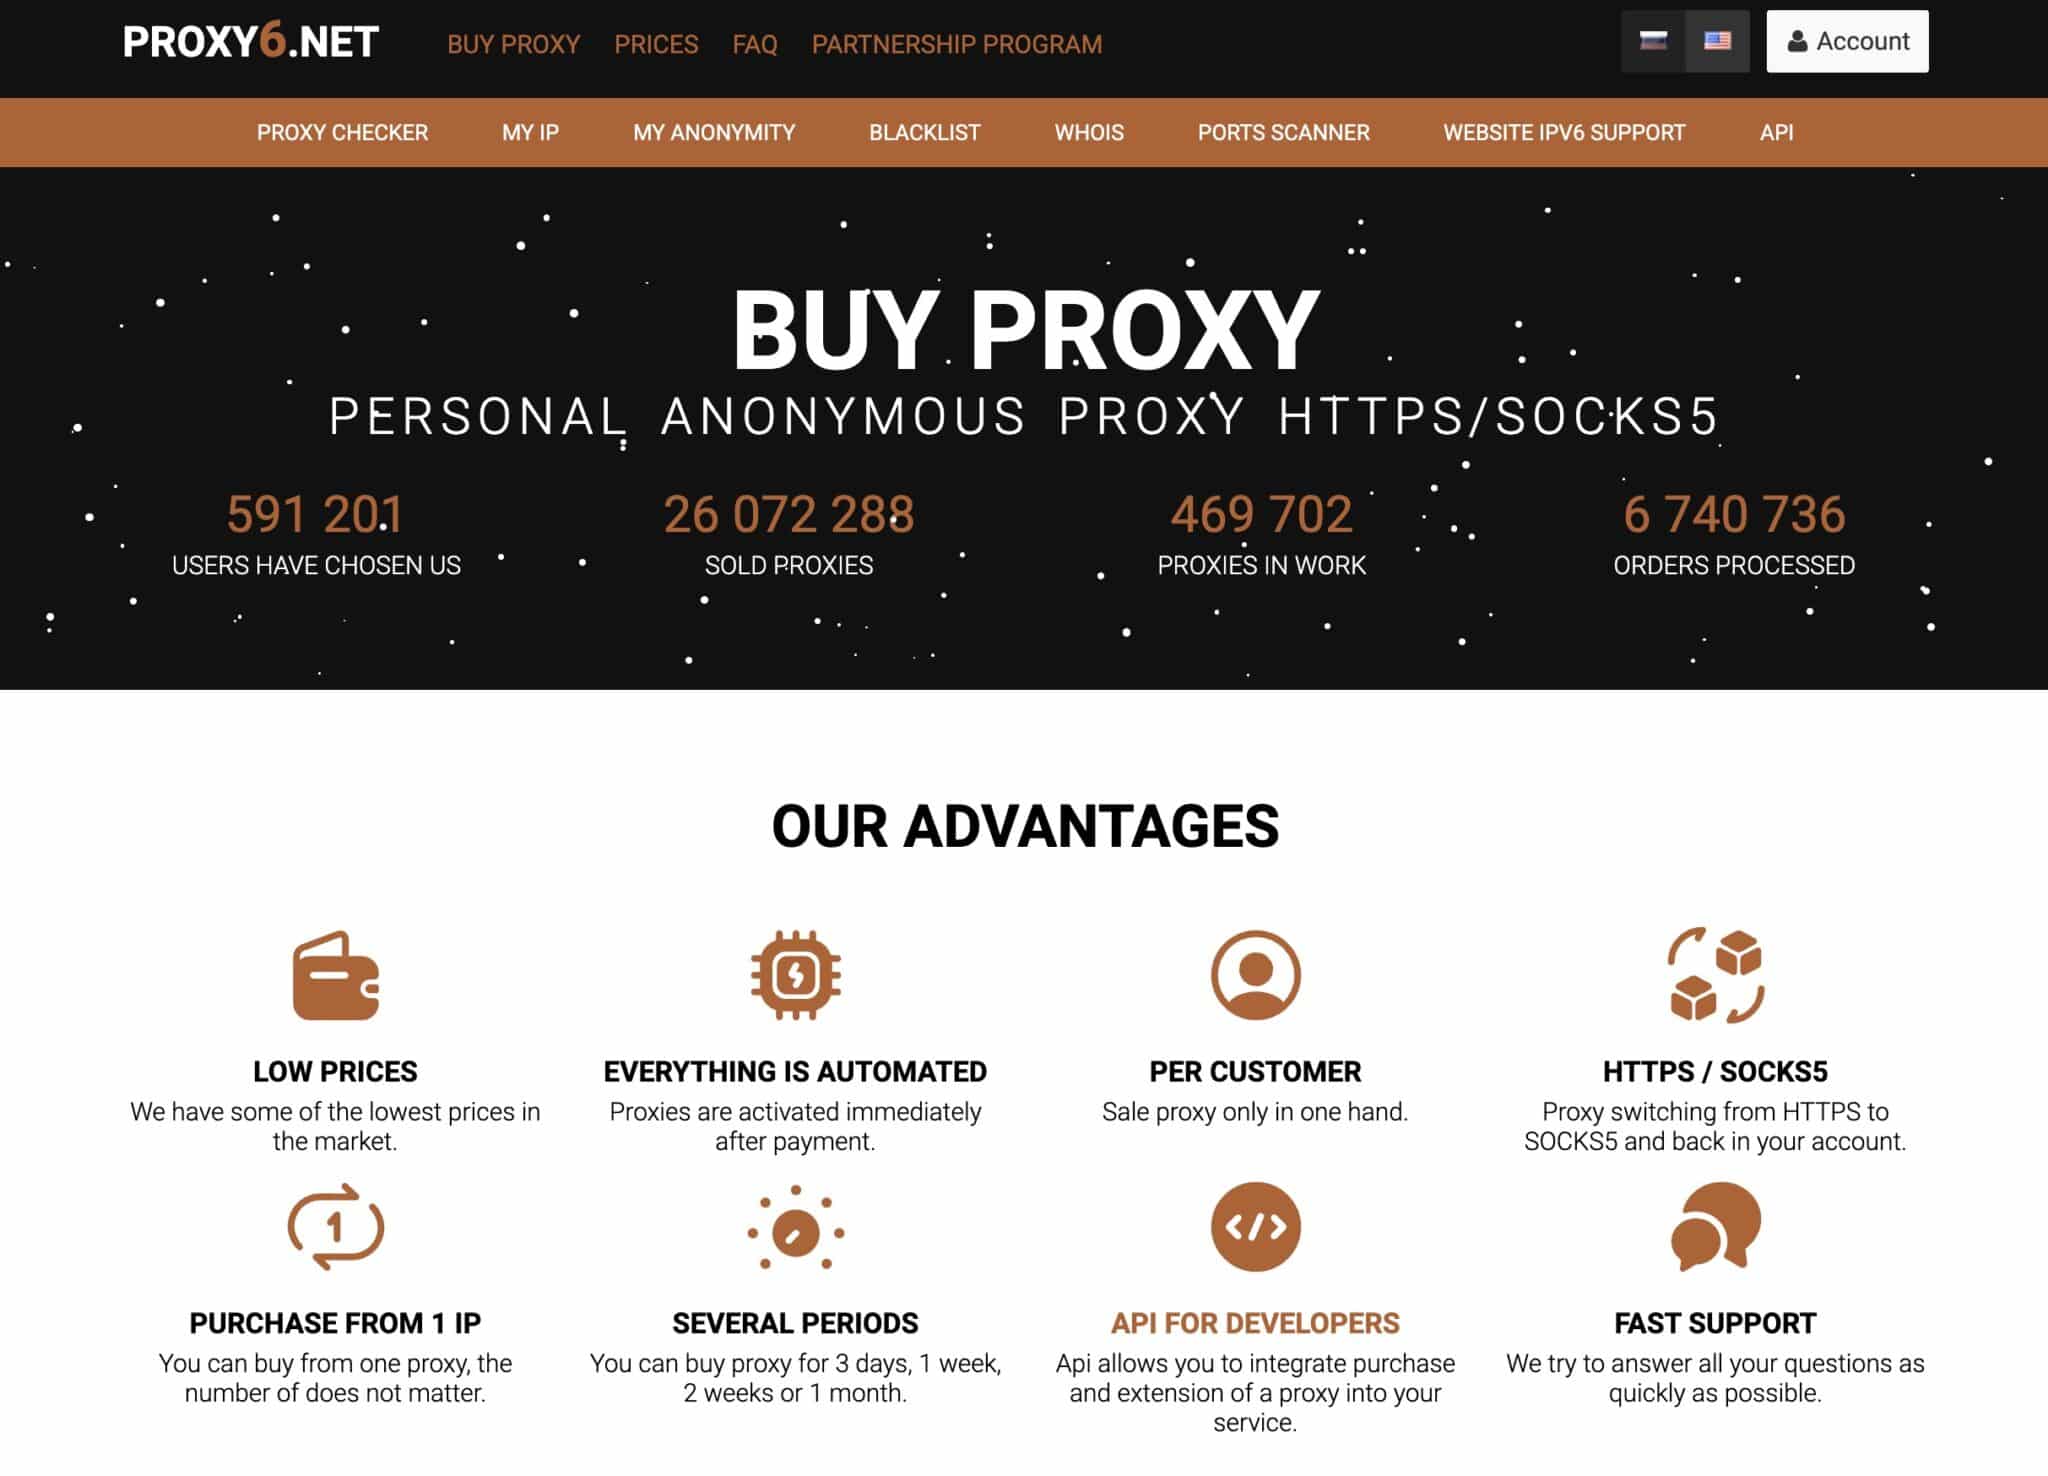 página web proxy6.net